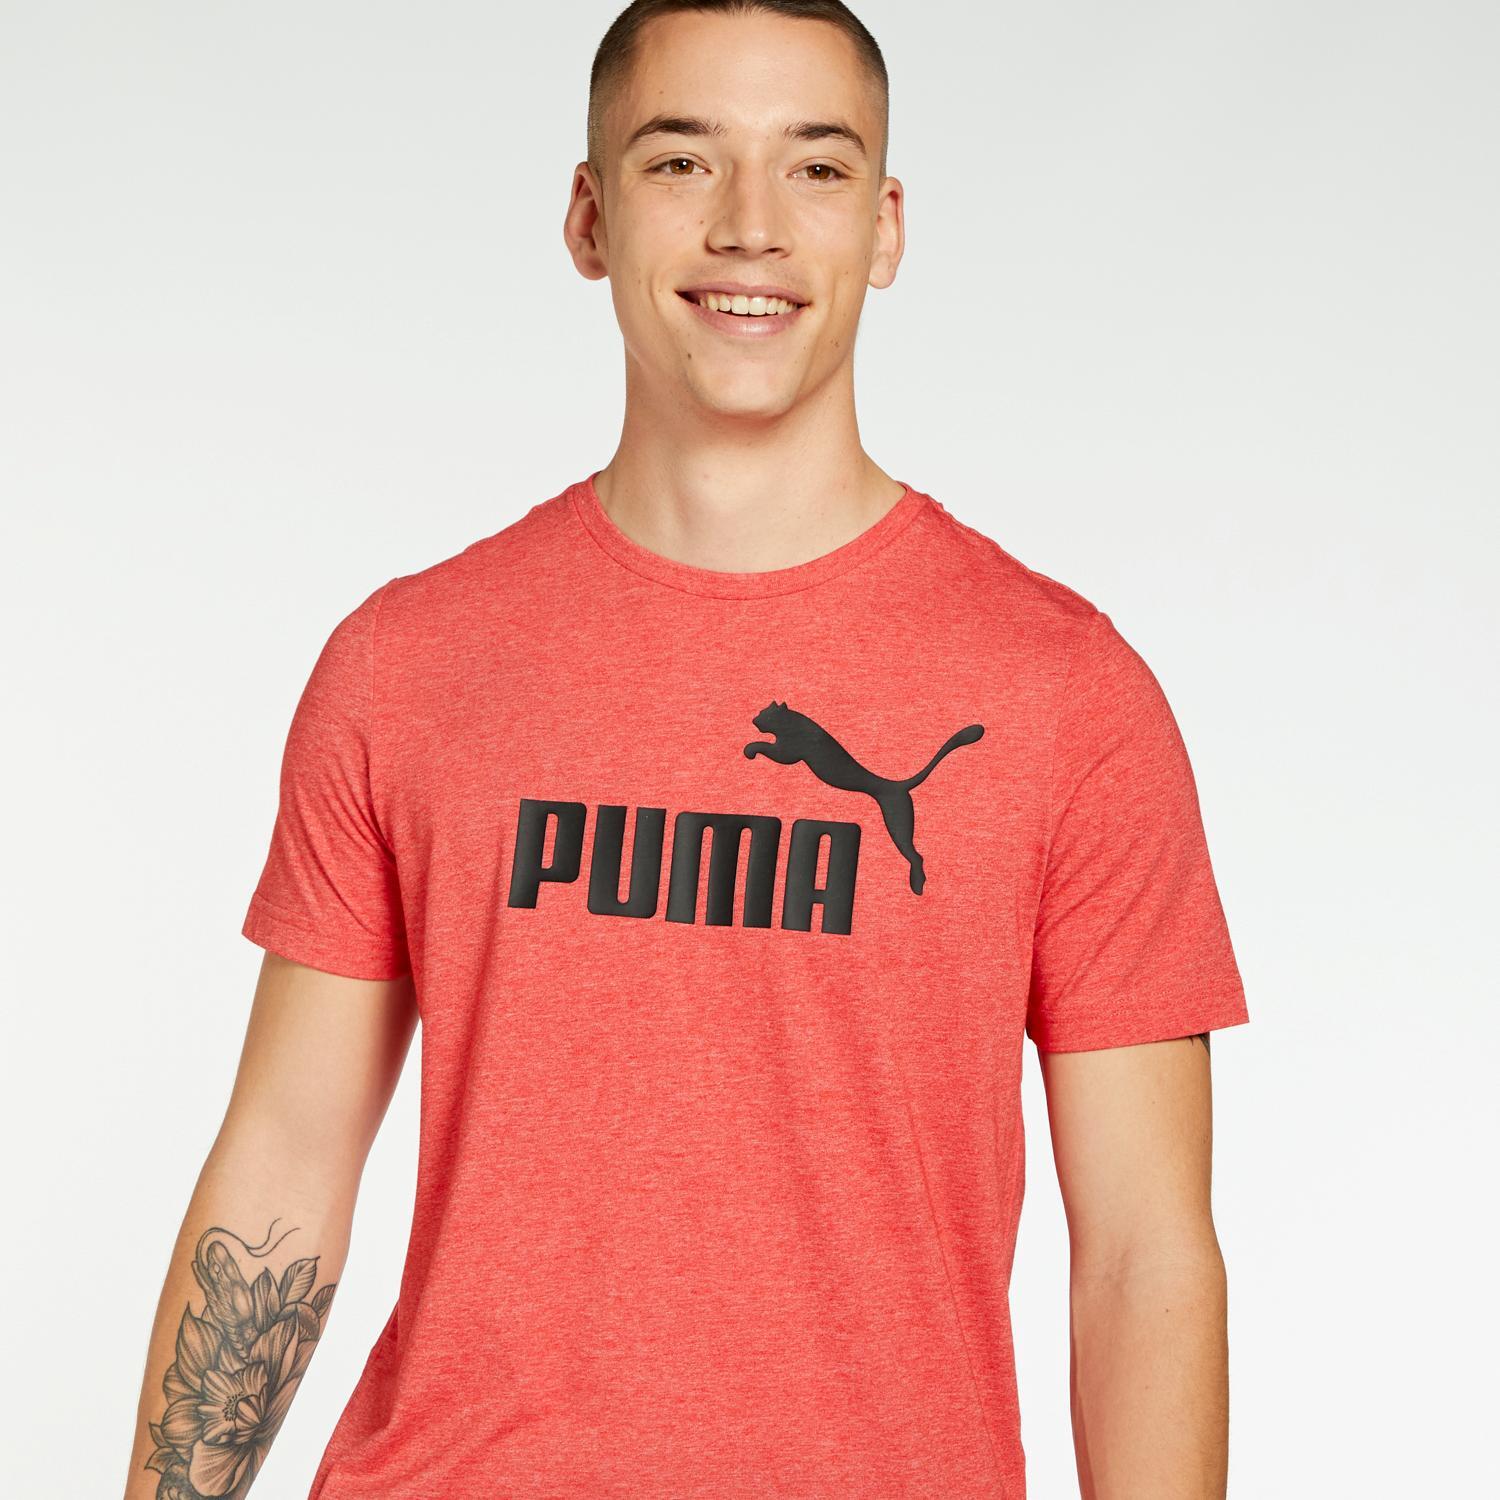 Puma Heather Rood T-shirt Heren